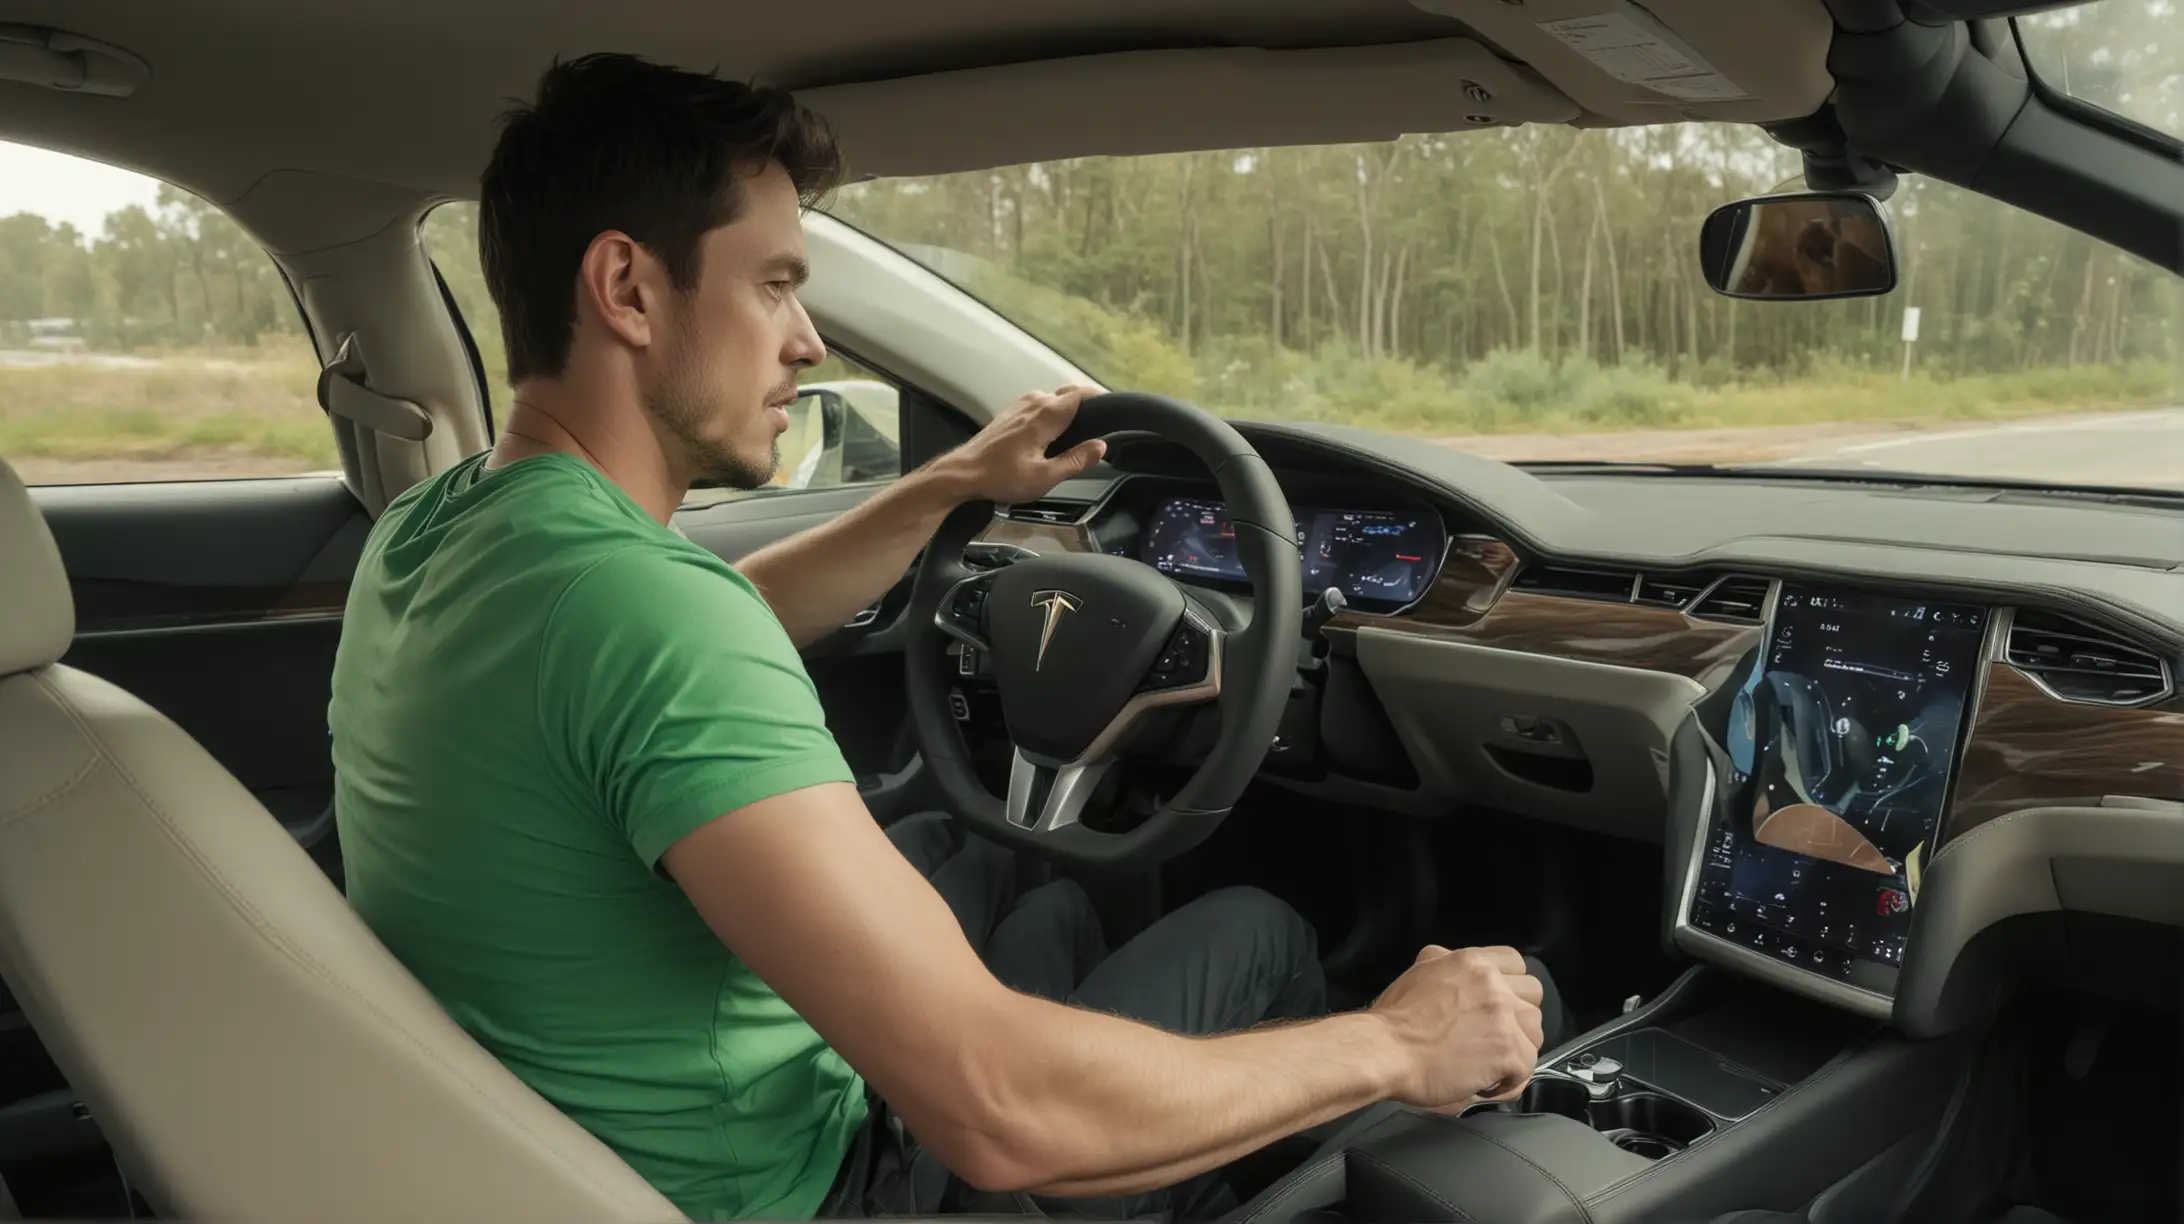 Man in Green Top Driving Tesla Car